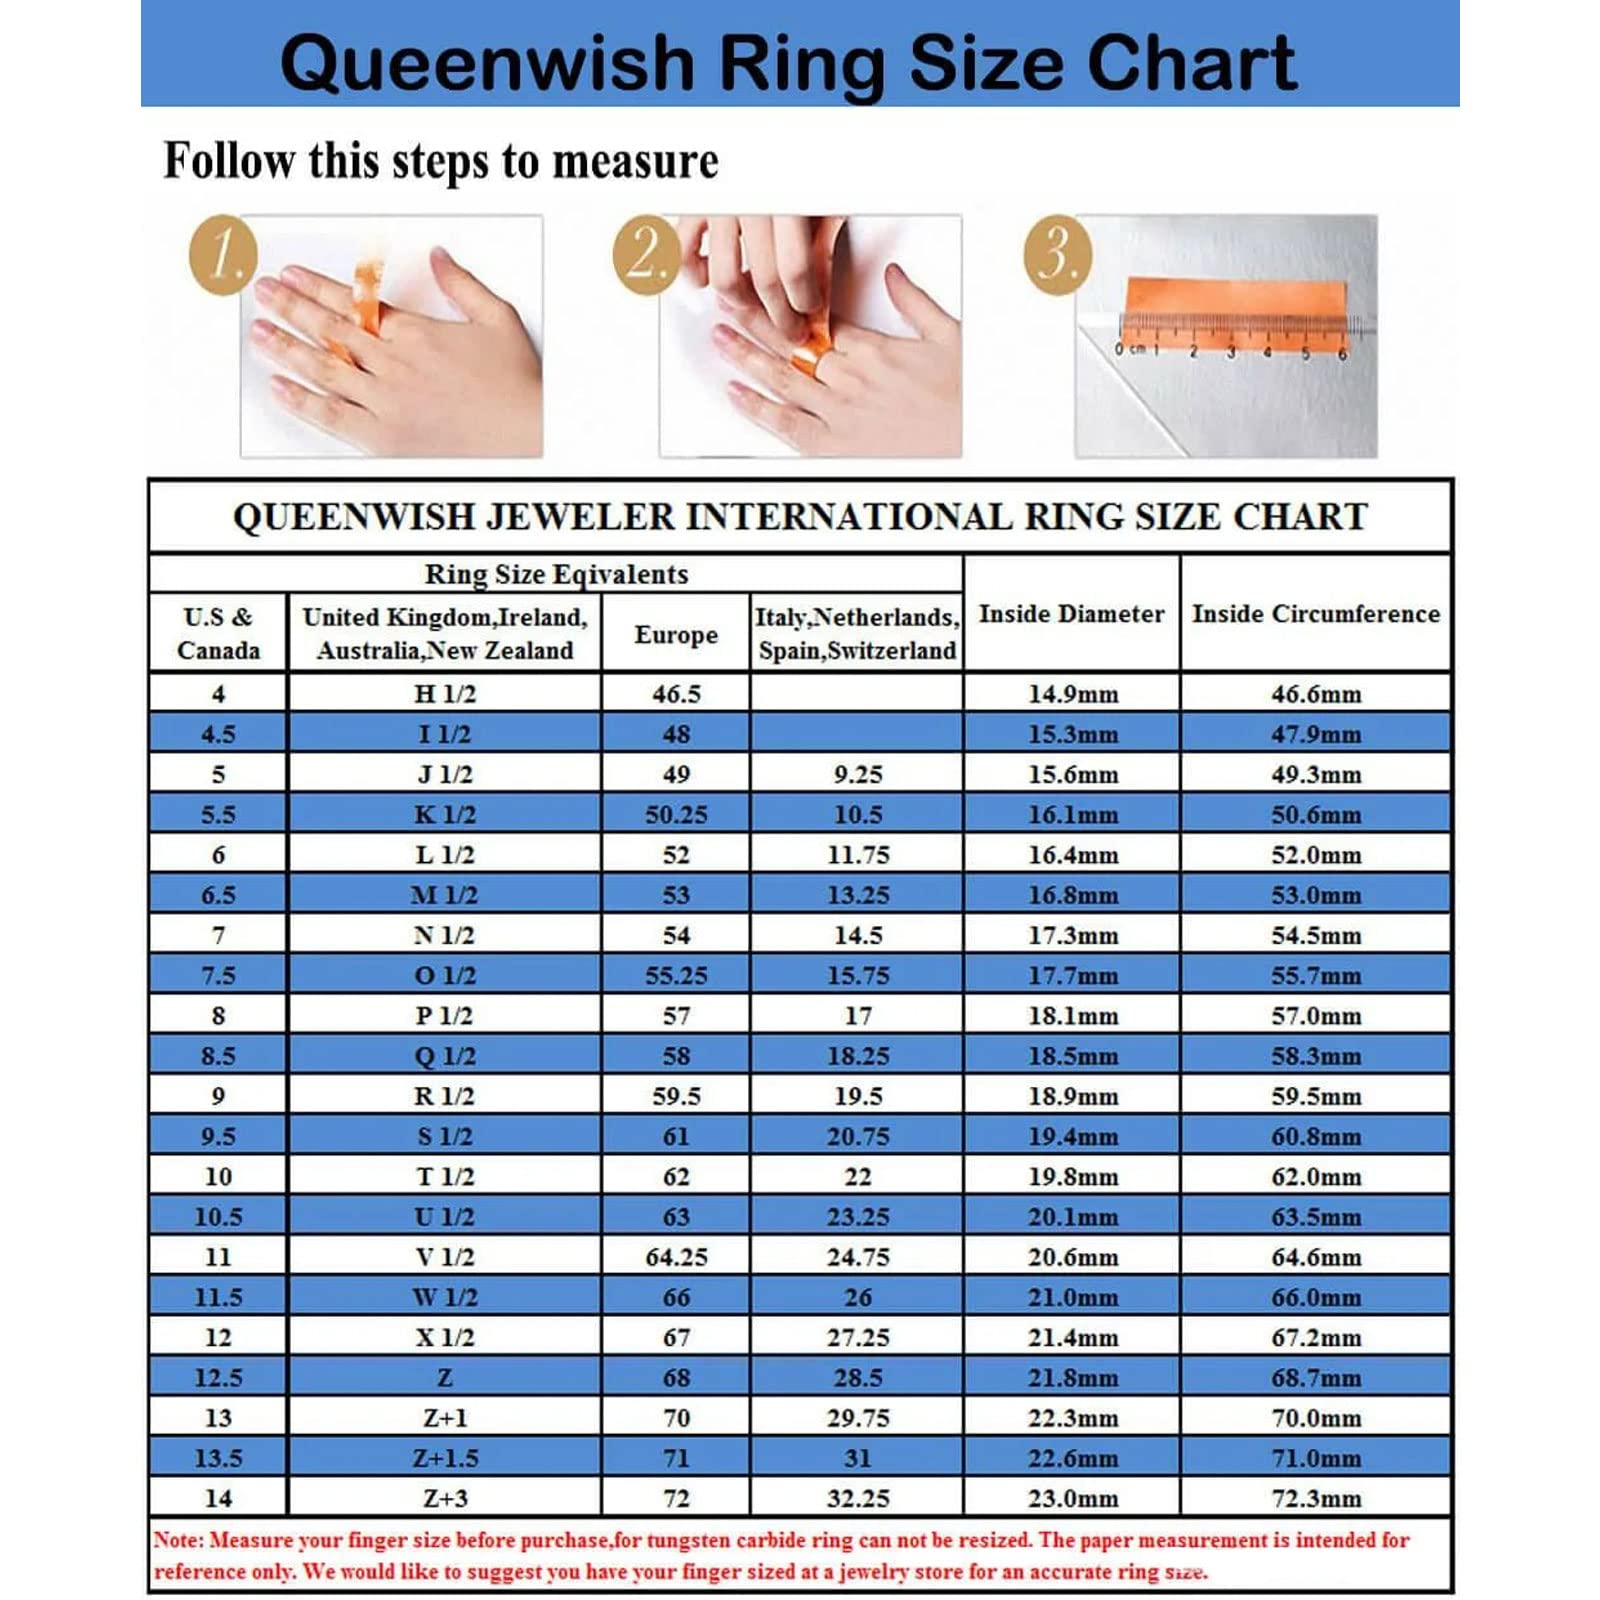 MRENITE 10K 14K 18K 1-2 Carat Oval Cut Moissanite Engagement Rings for Women D Color Solitaire Oval Moissnite Promise Anniversary Ring Jewelry Gift for Her